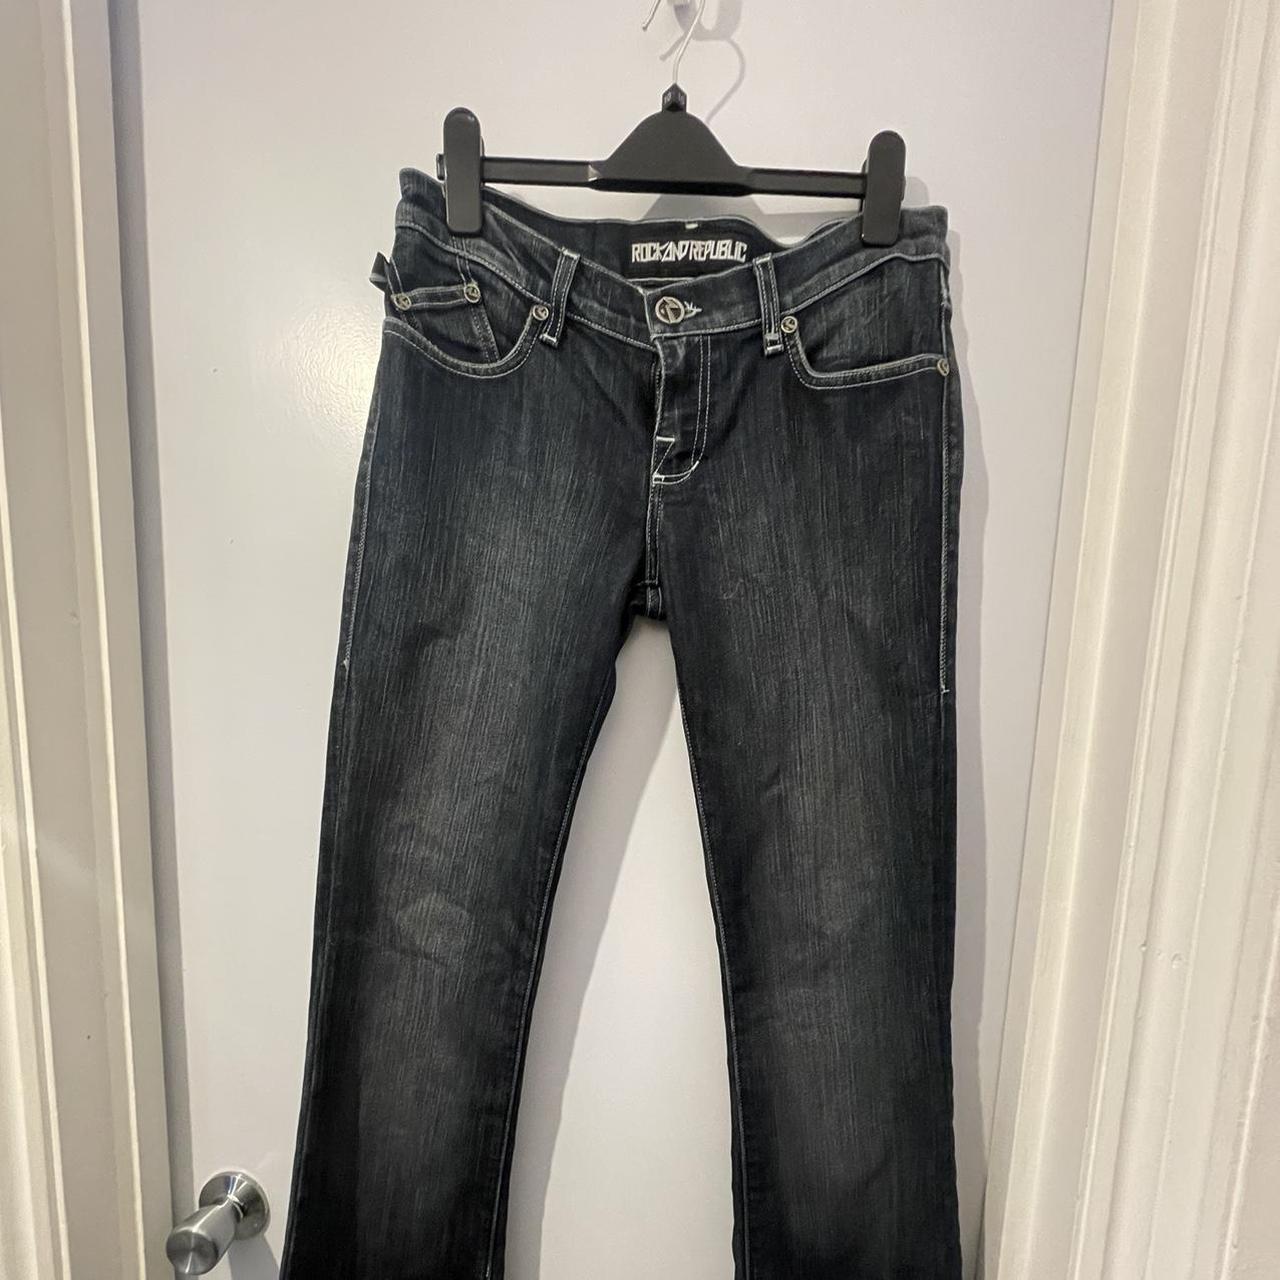 Victoria Beckham Rock and republic jeans size 6/8... - Depop